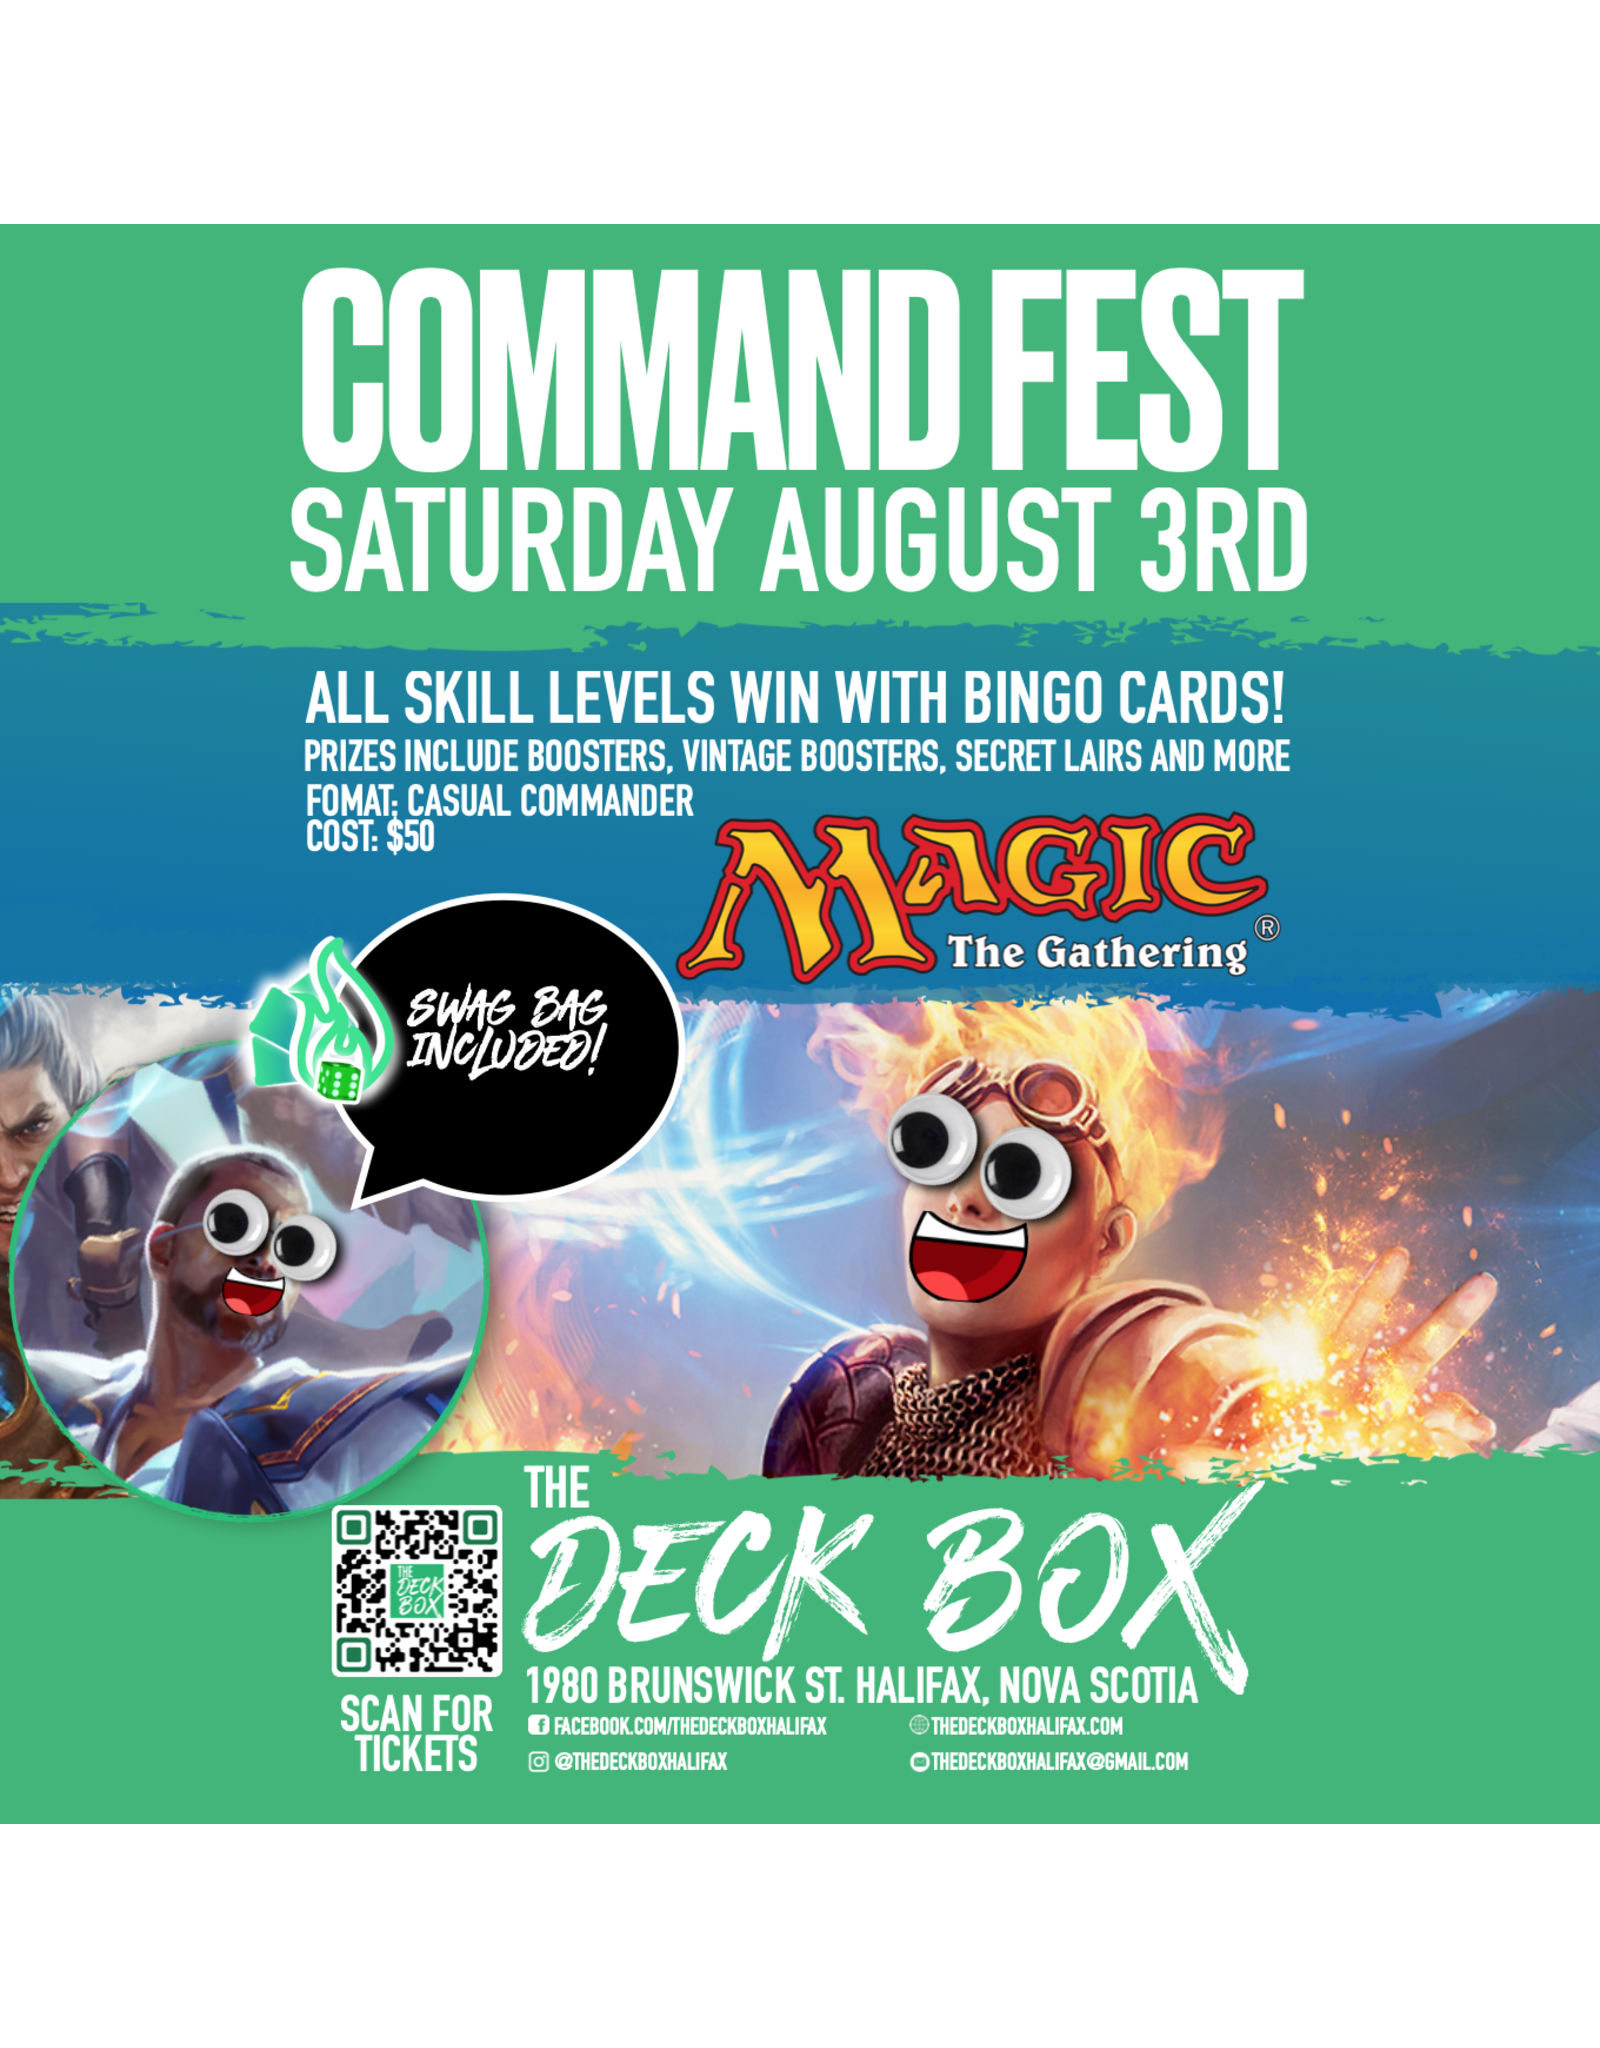 Events The Deck Box Commander Fest!